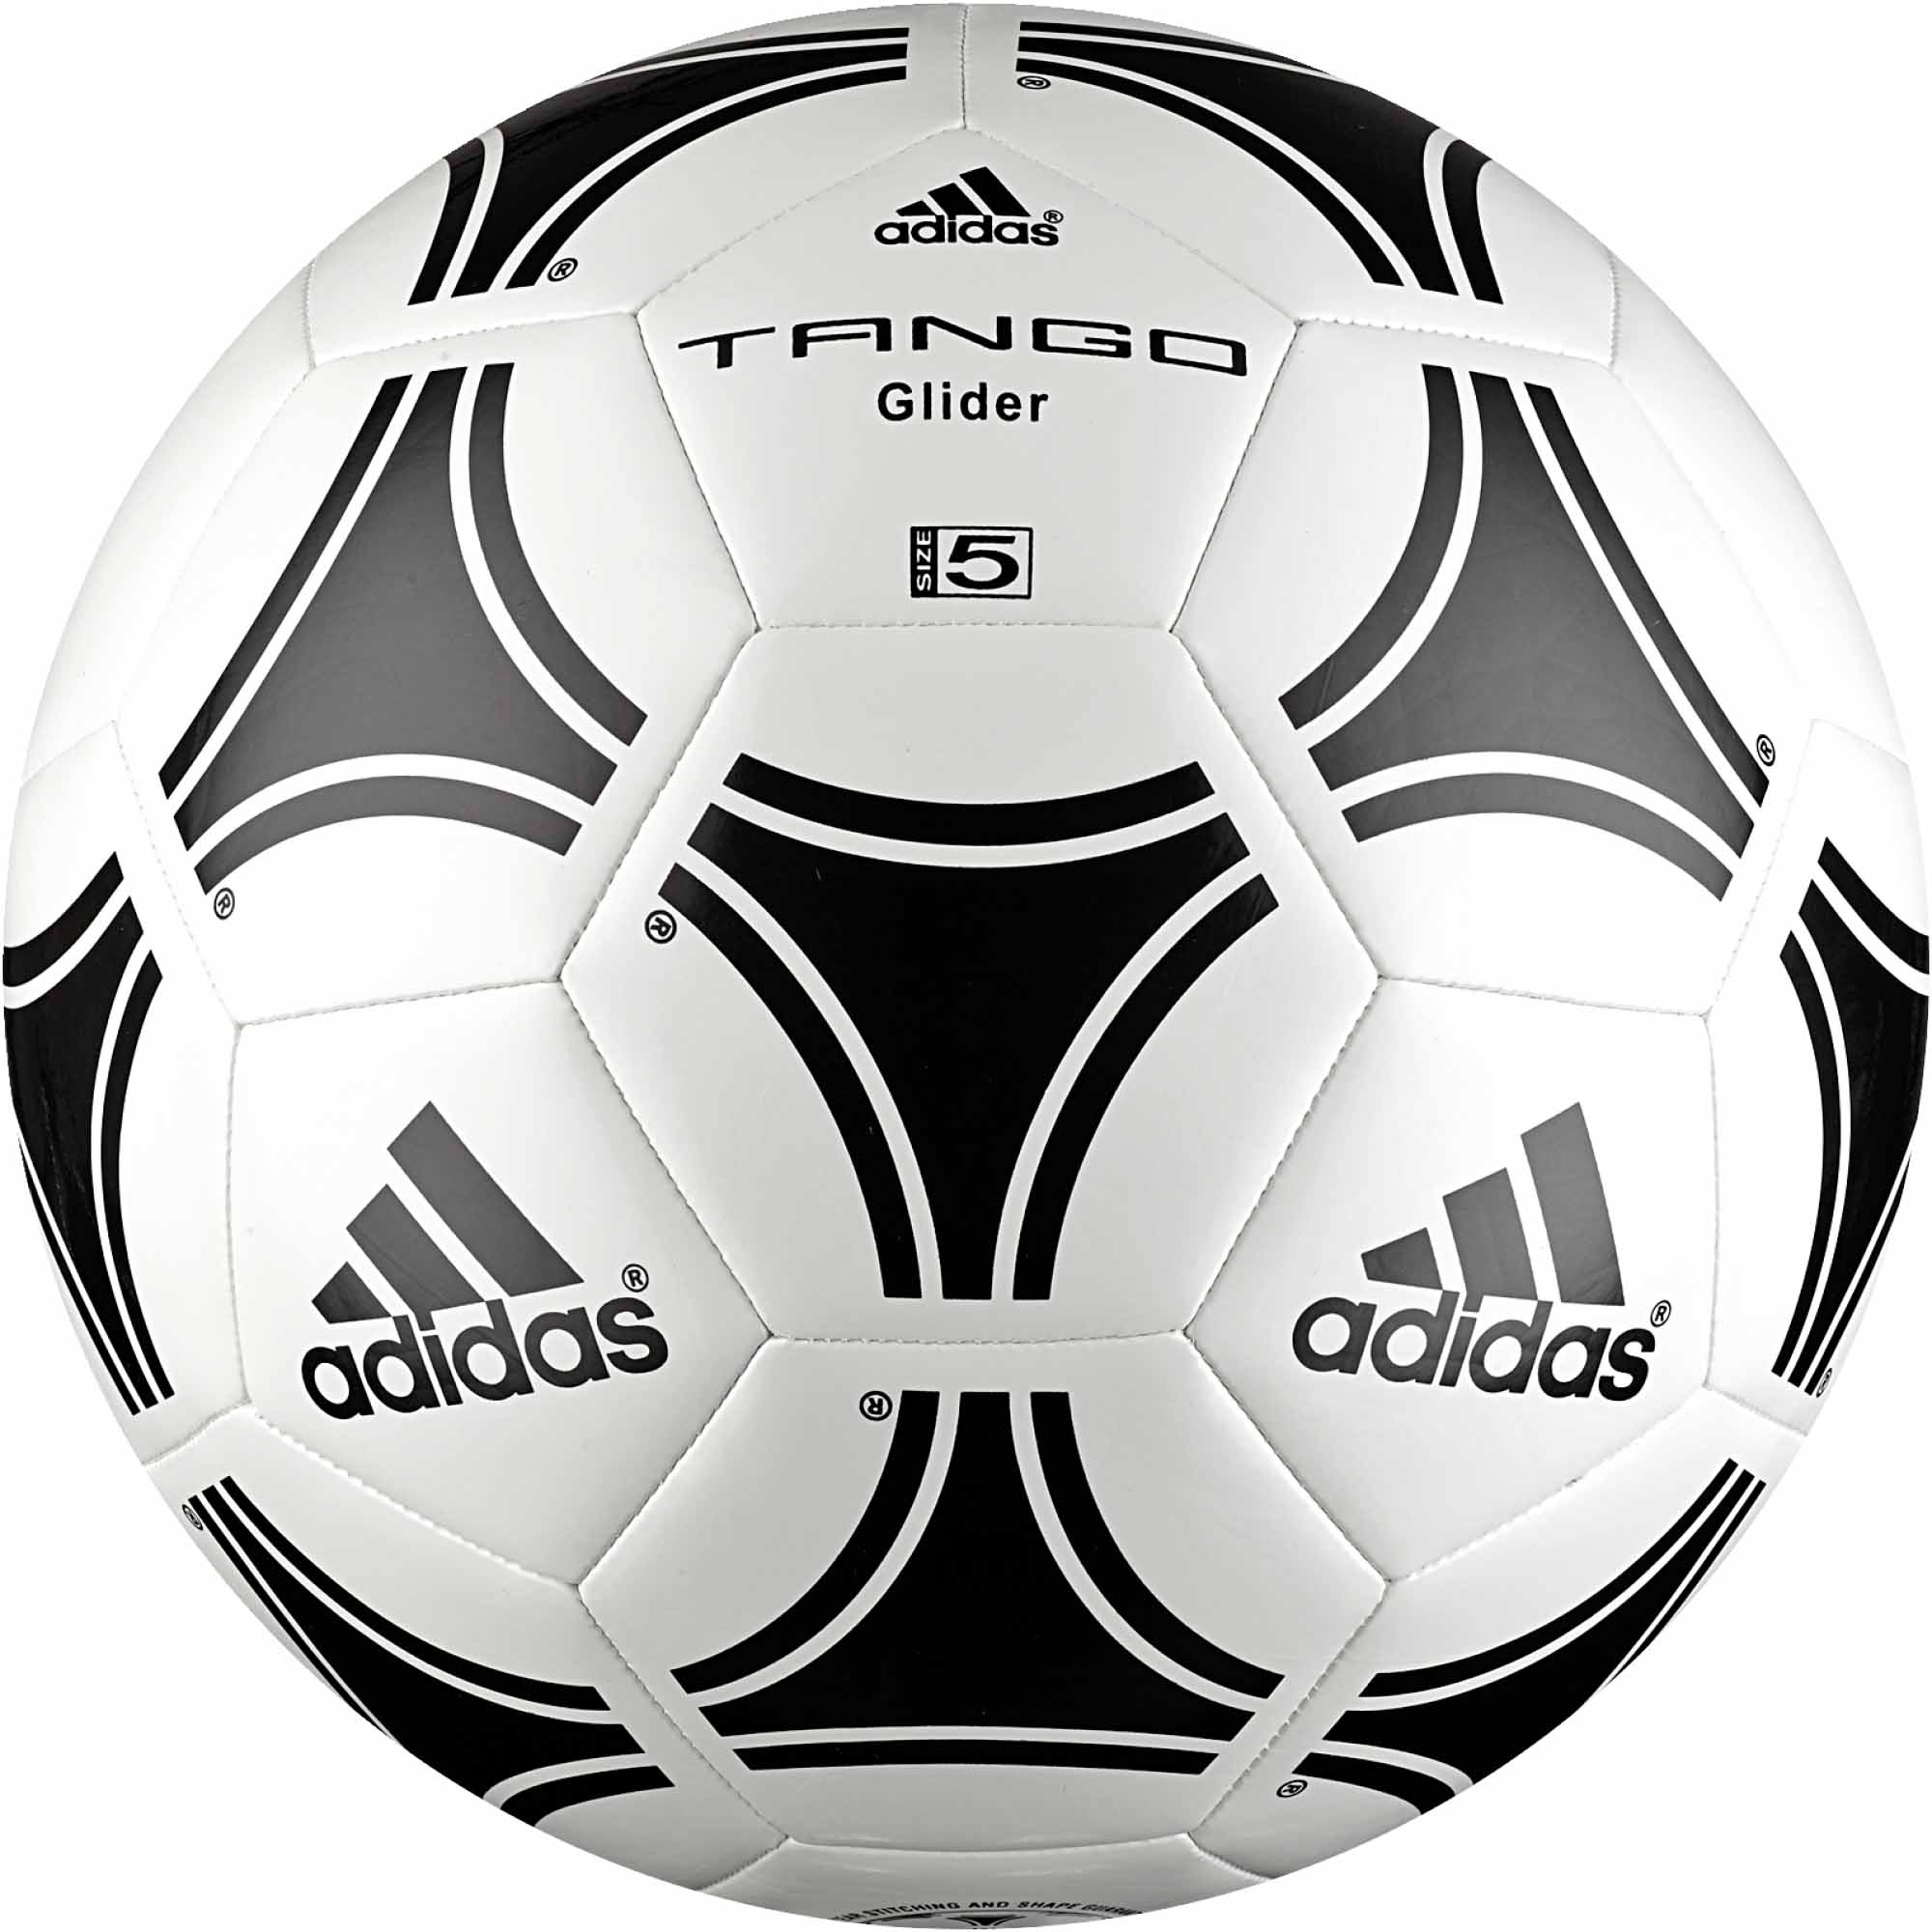 tango glider soccer ball